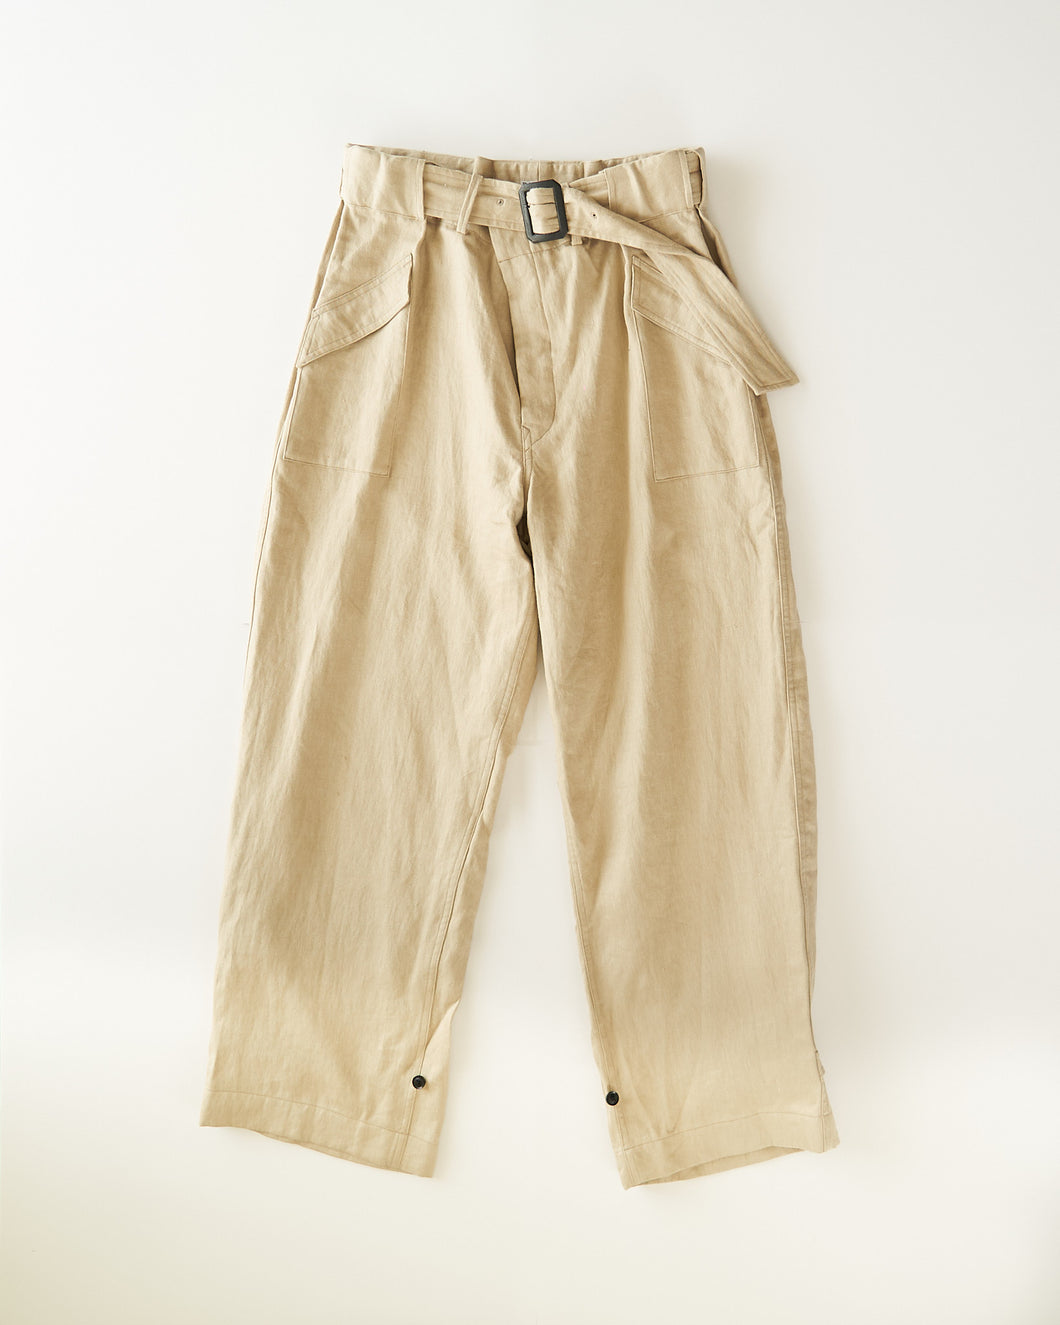 Linen chino / Field pants